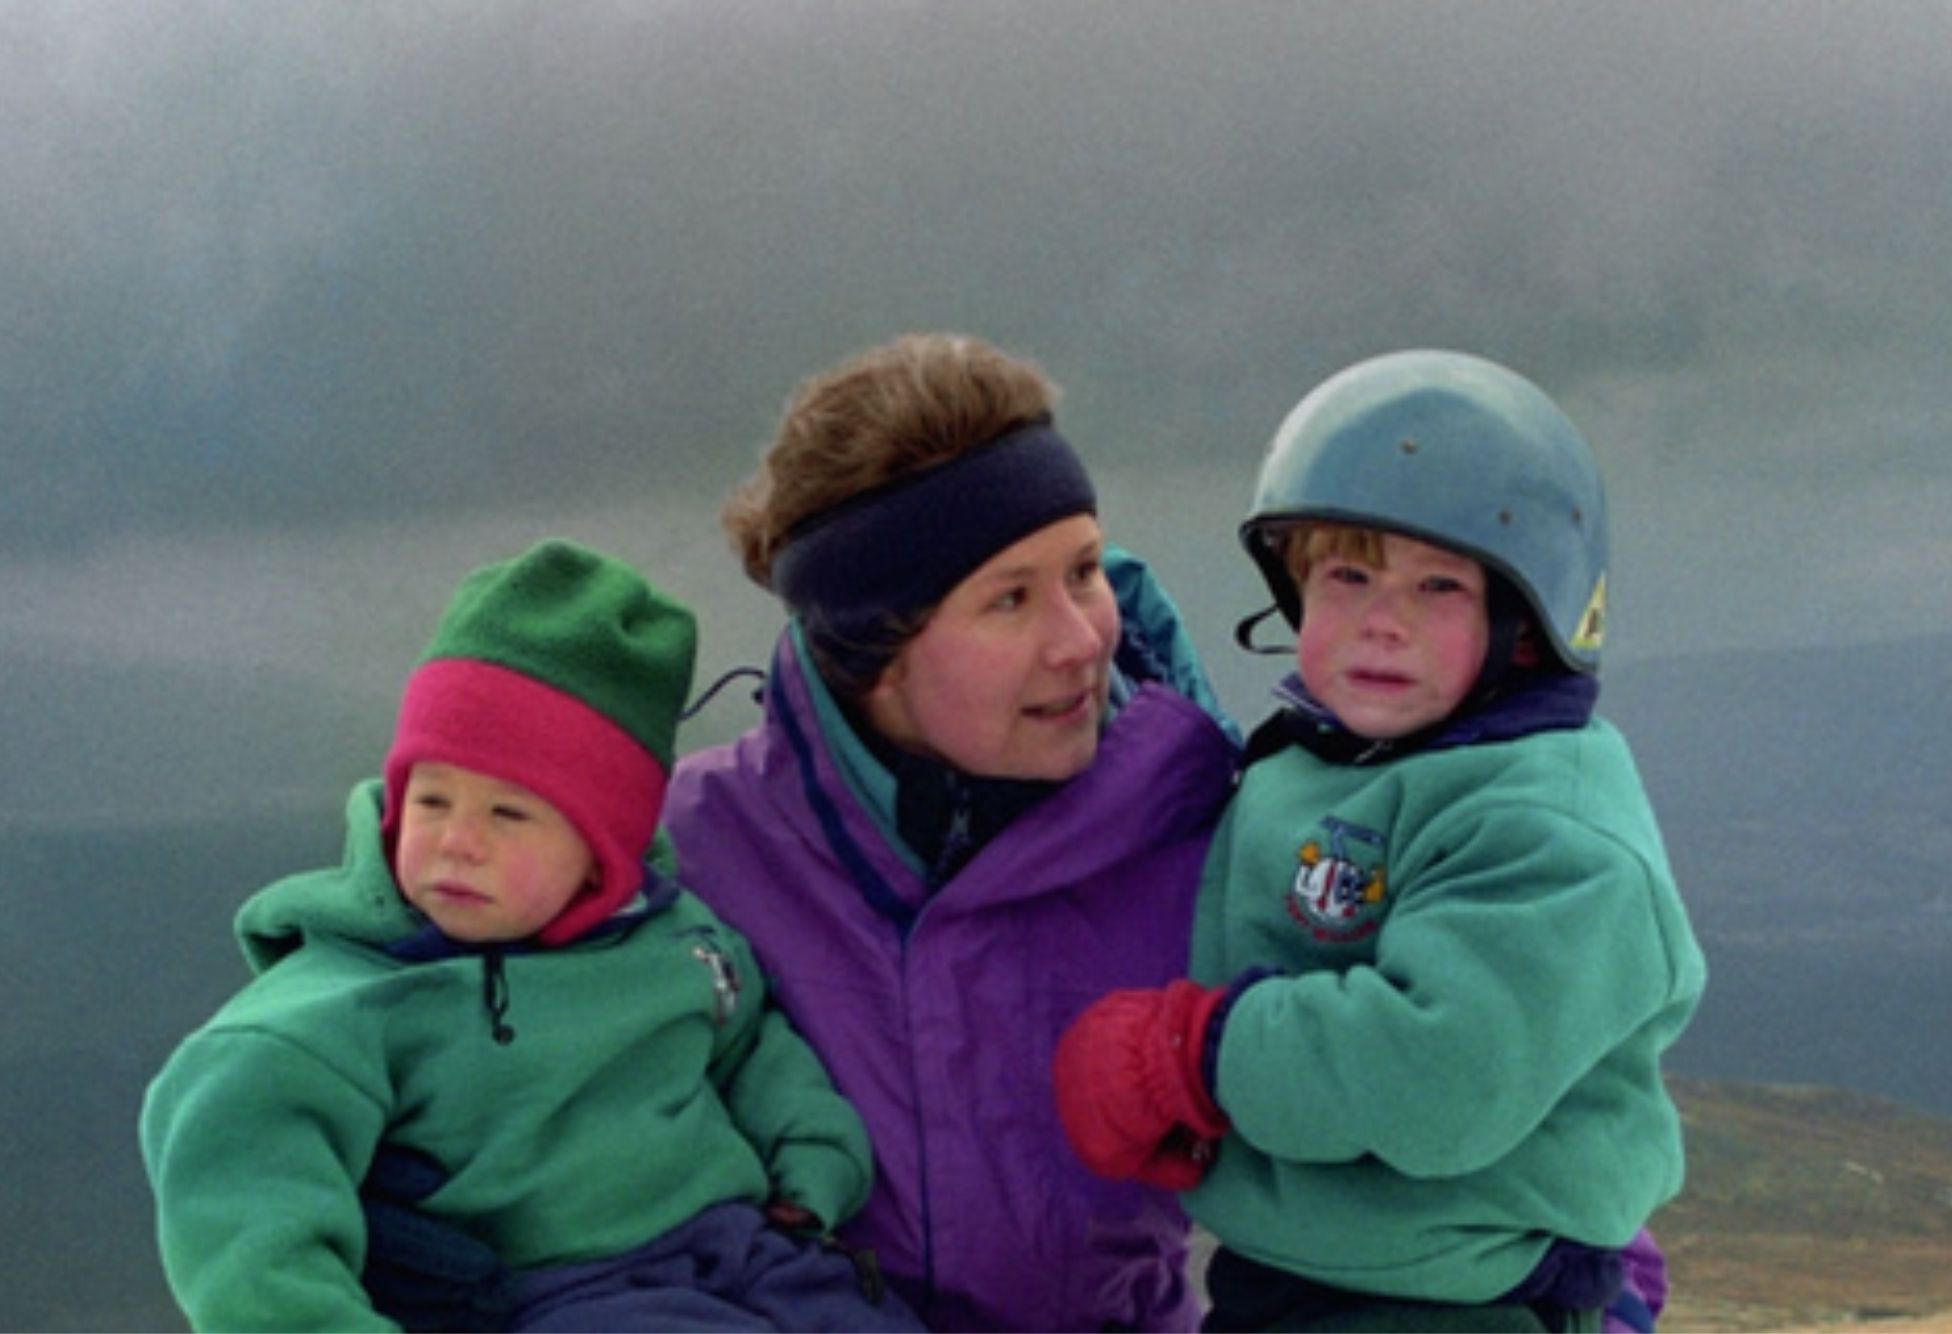 Элисон Харгривз (Alison Hargreaves) со своими детьми незадолго до гибели на К2